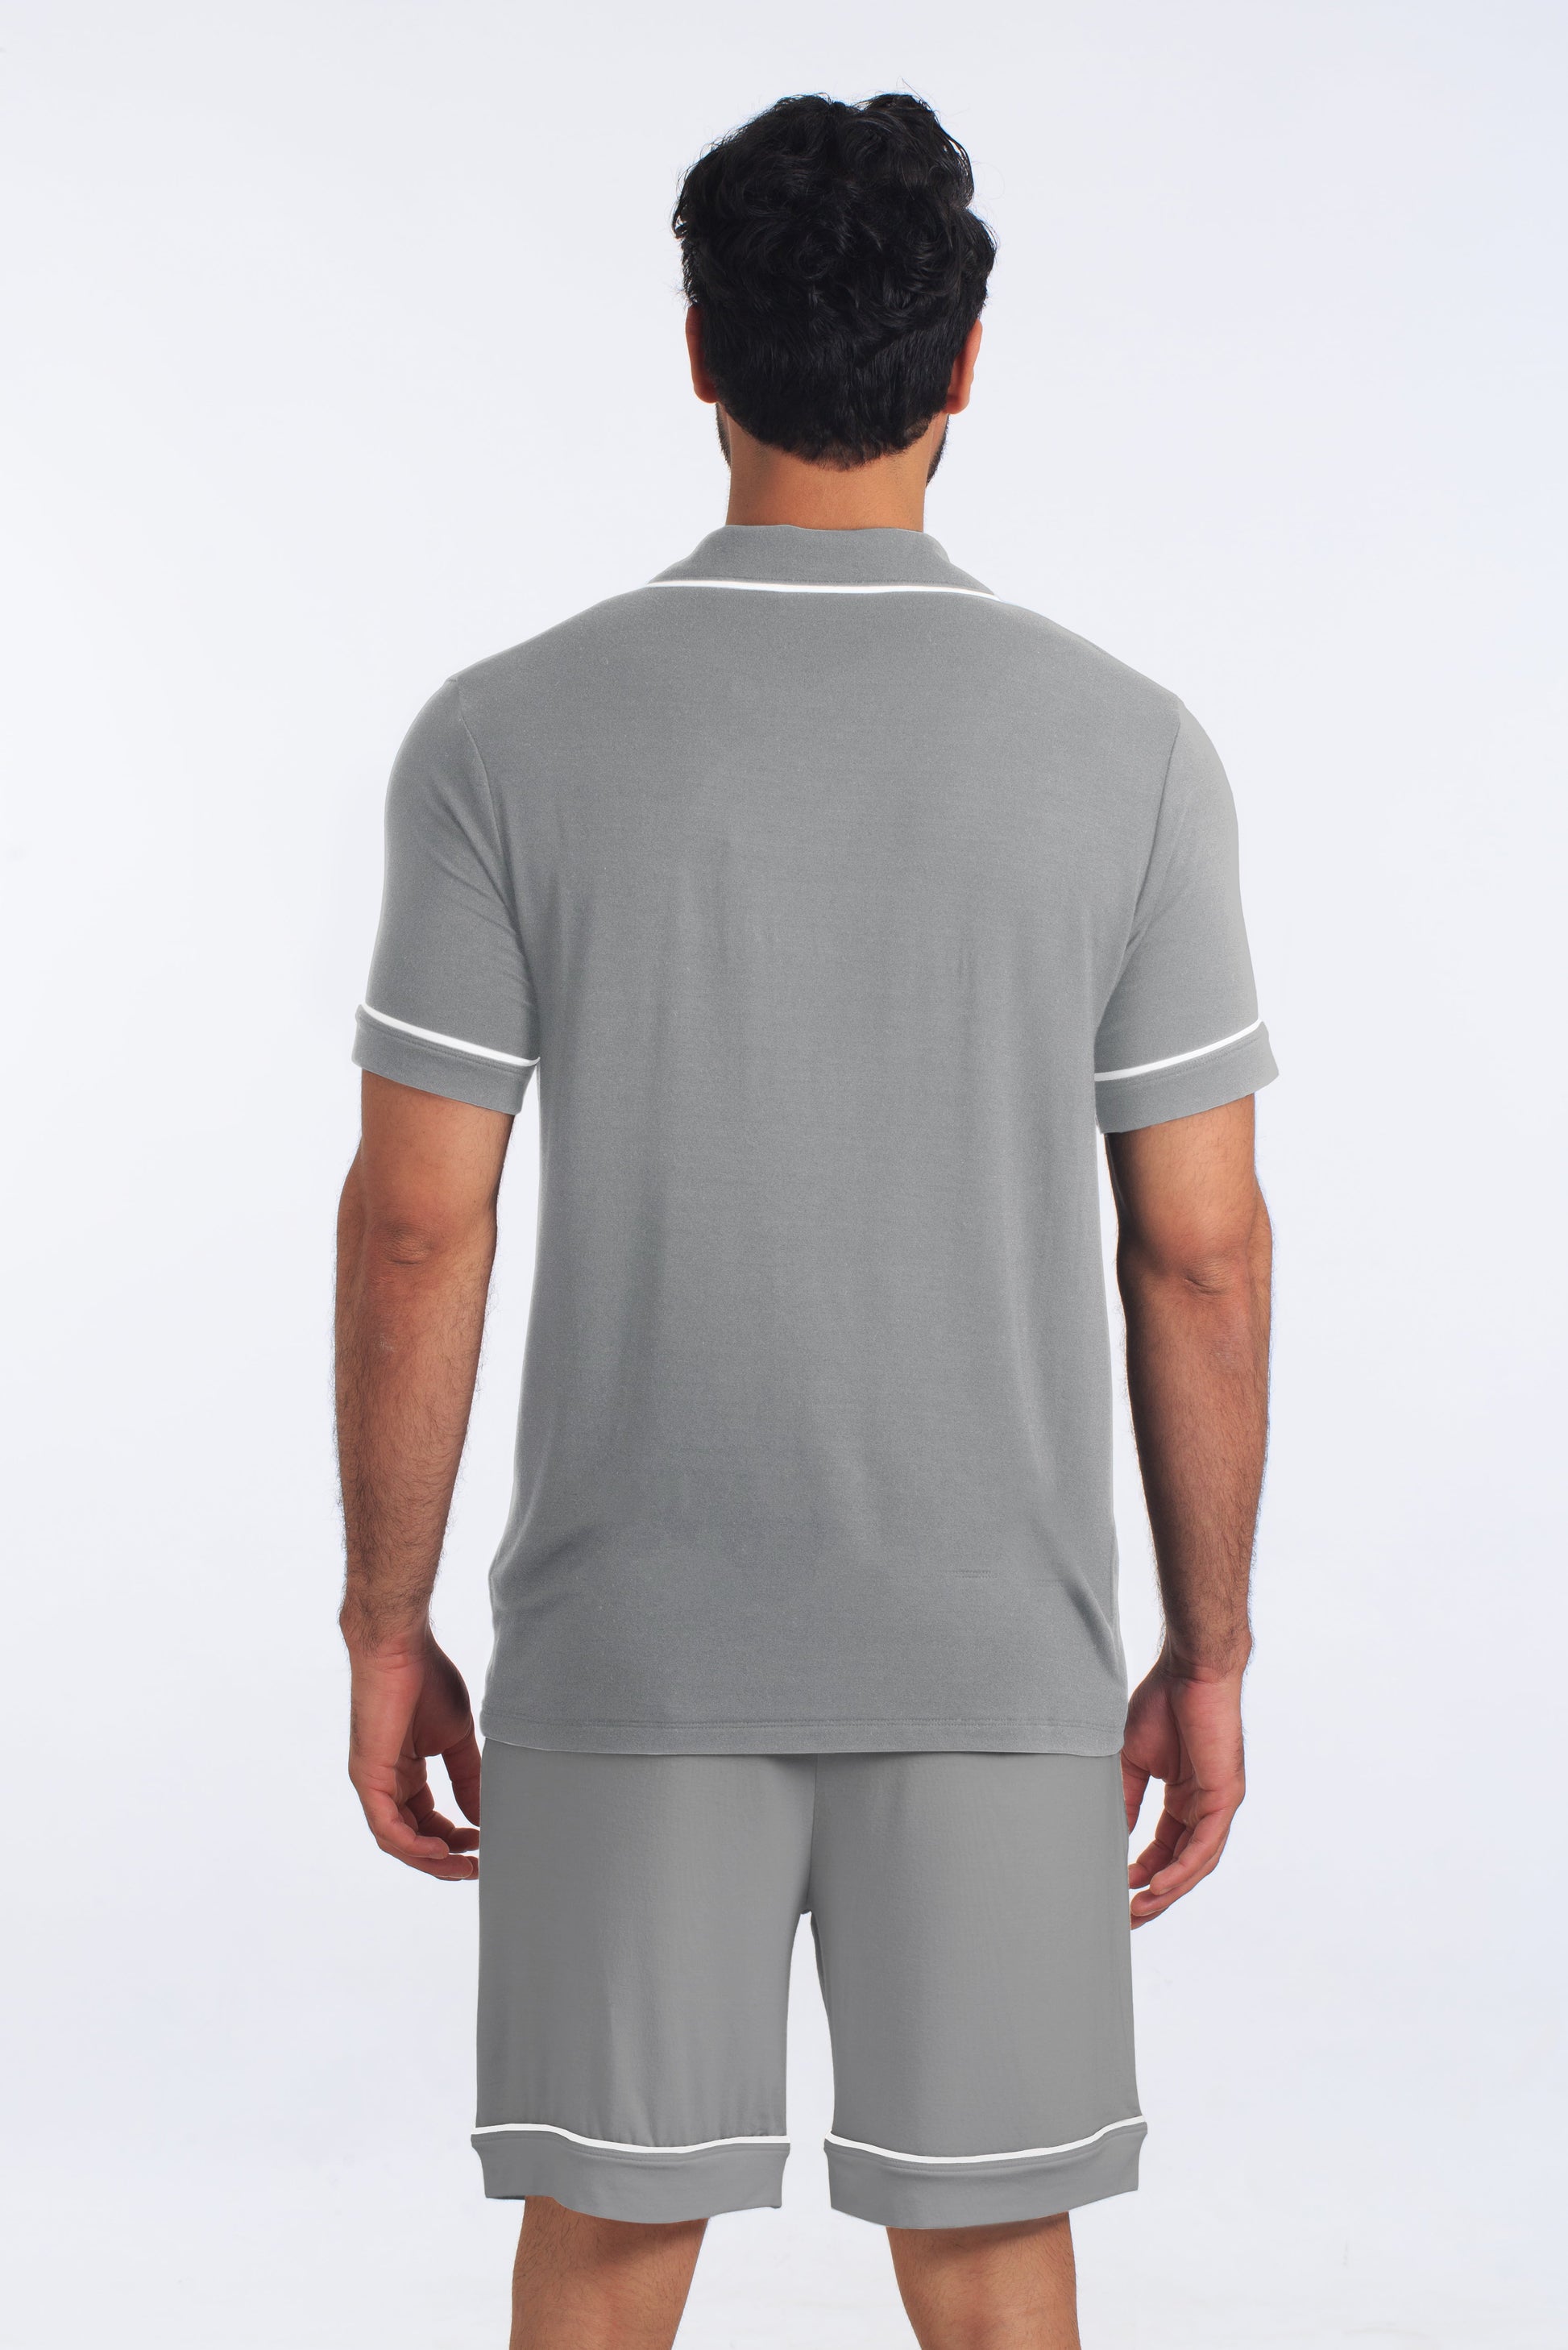 Ultimate Grey PJ Boyfriend Set (Shirt + Short) JBFSH4116 Back